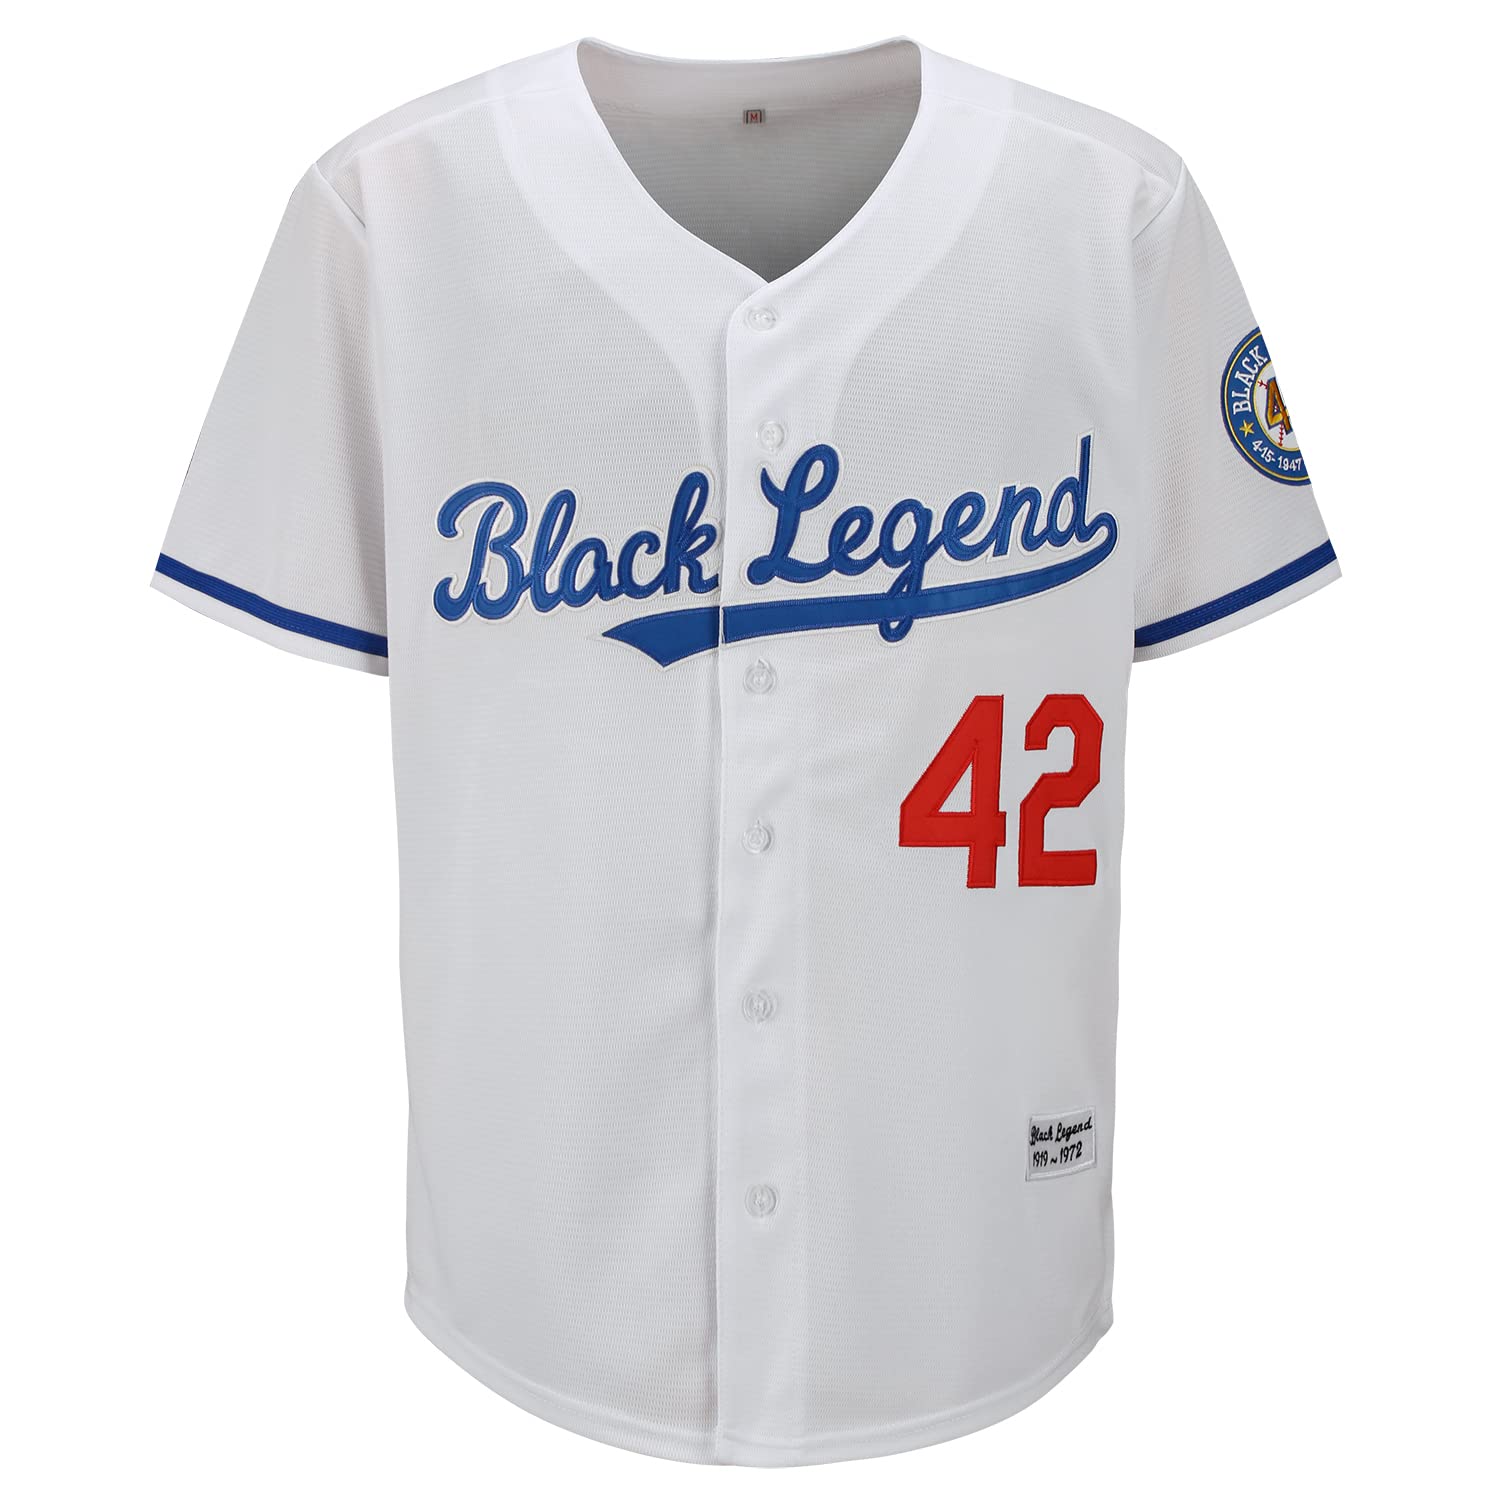  Dabuliu Men's Black Legend 42 Retro Baseball Jersey